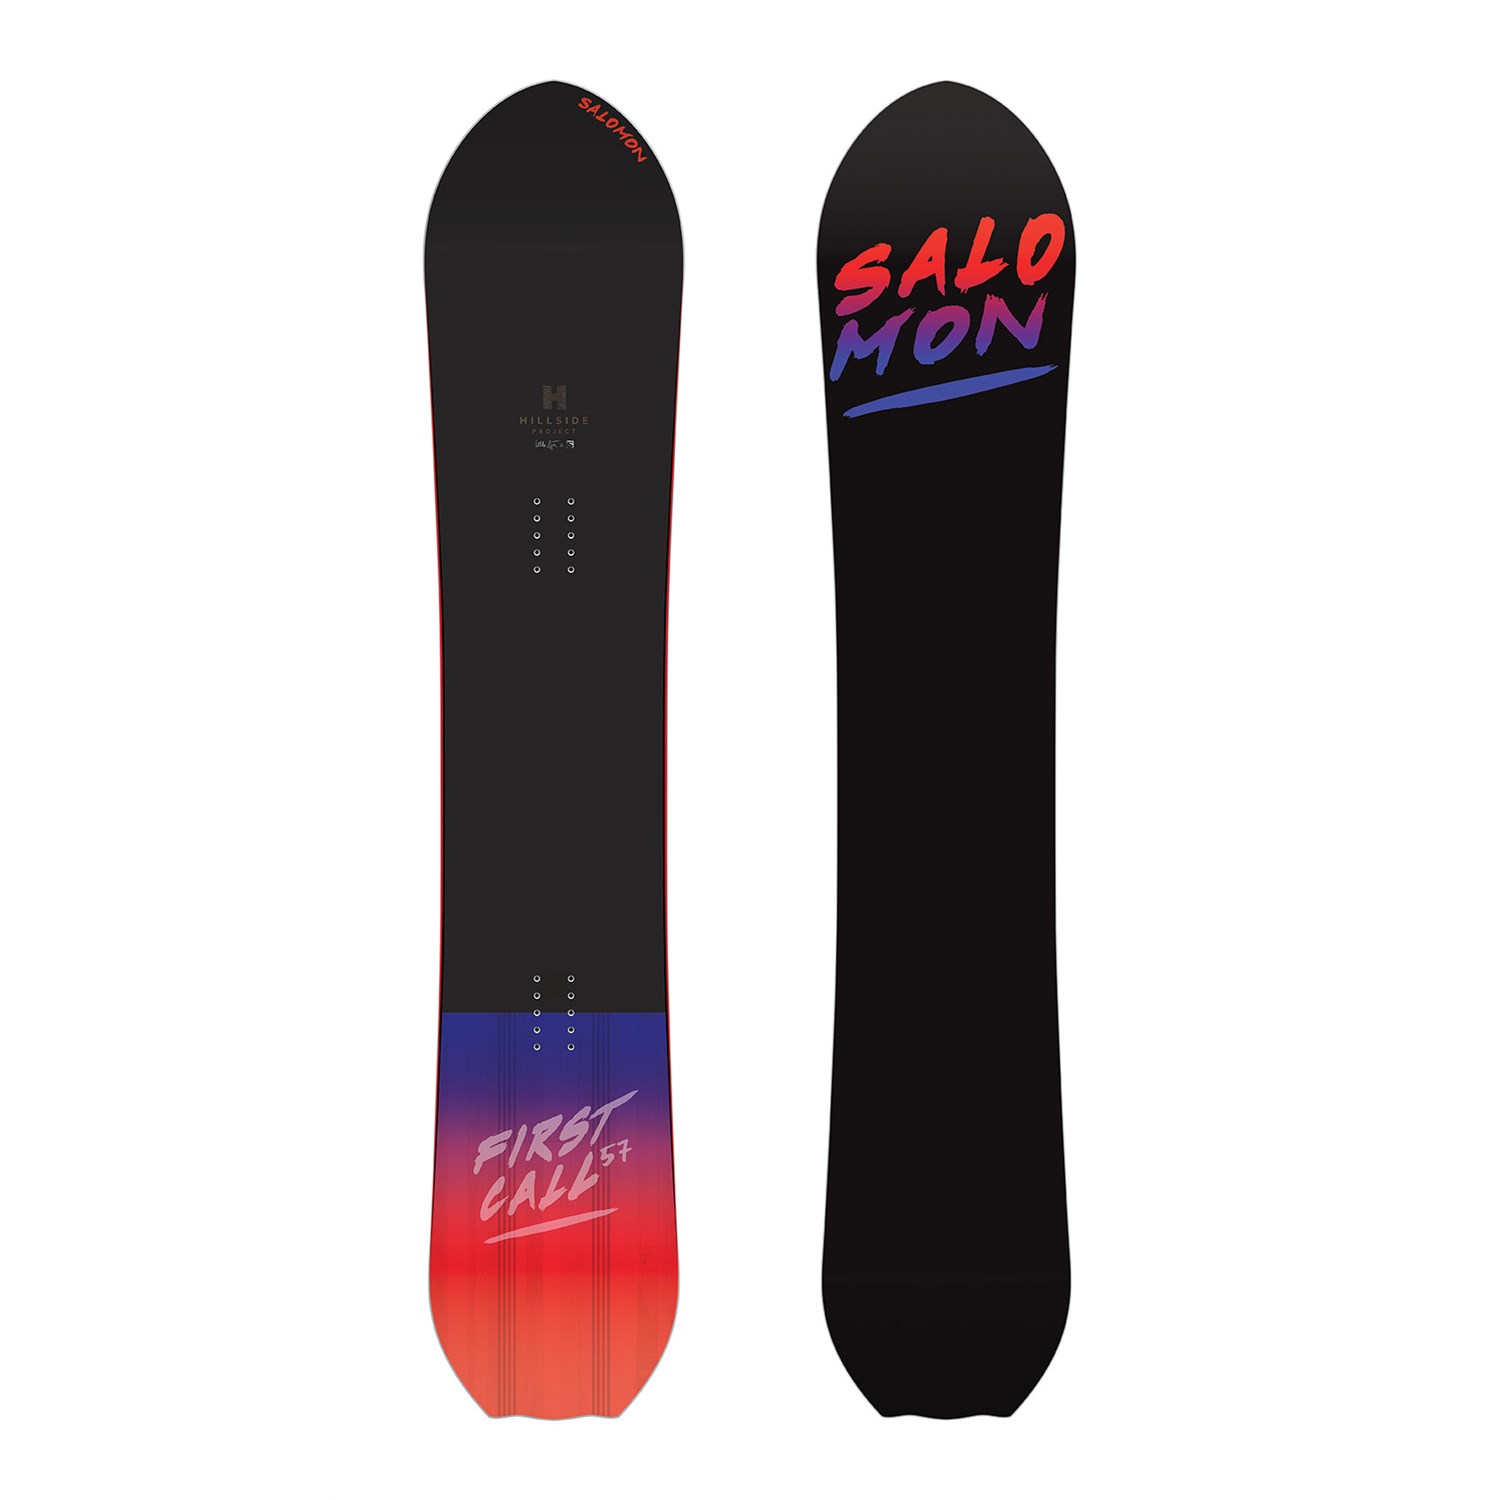 Salomon First Call Snowboard 2019 | evo